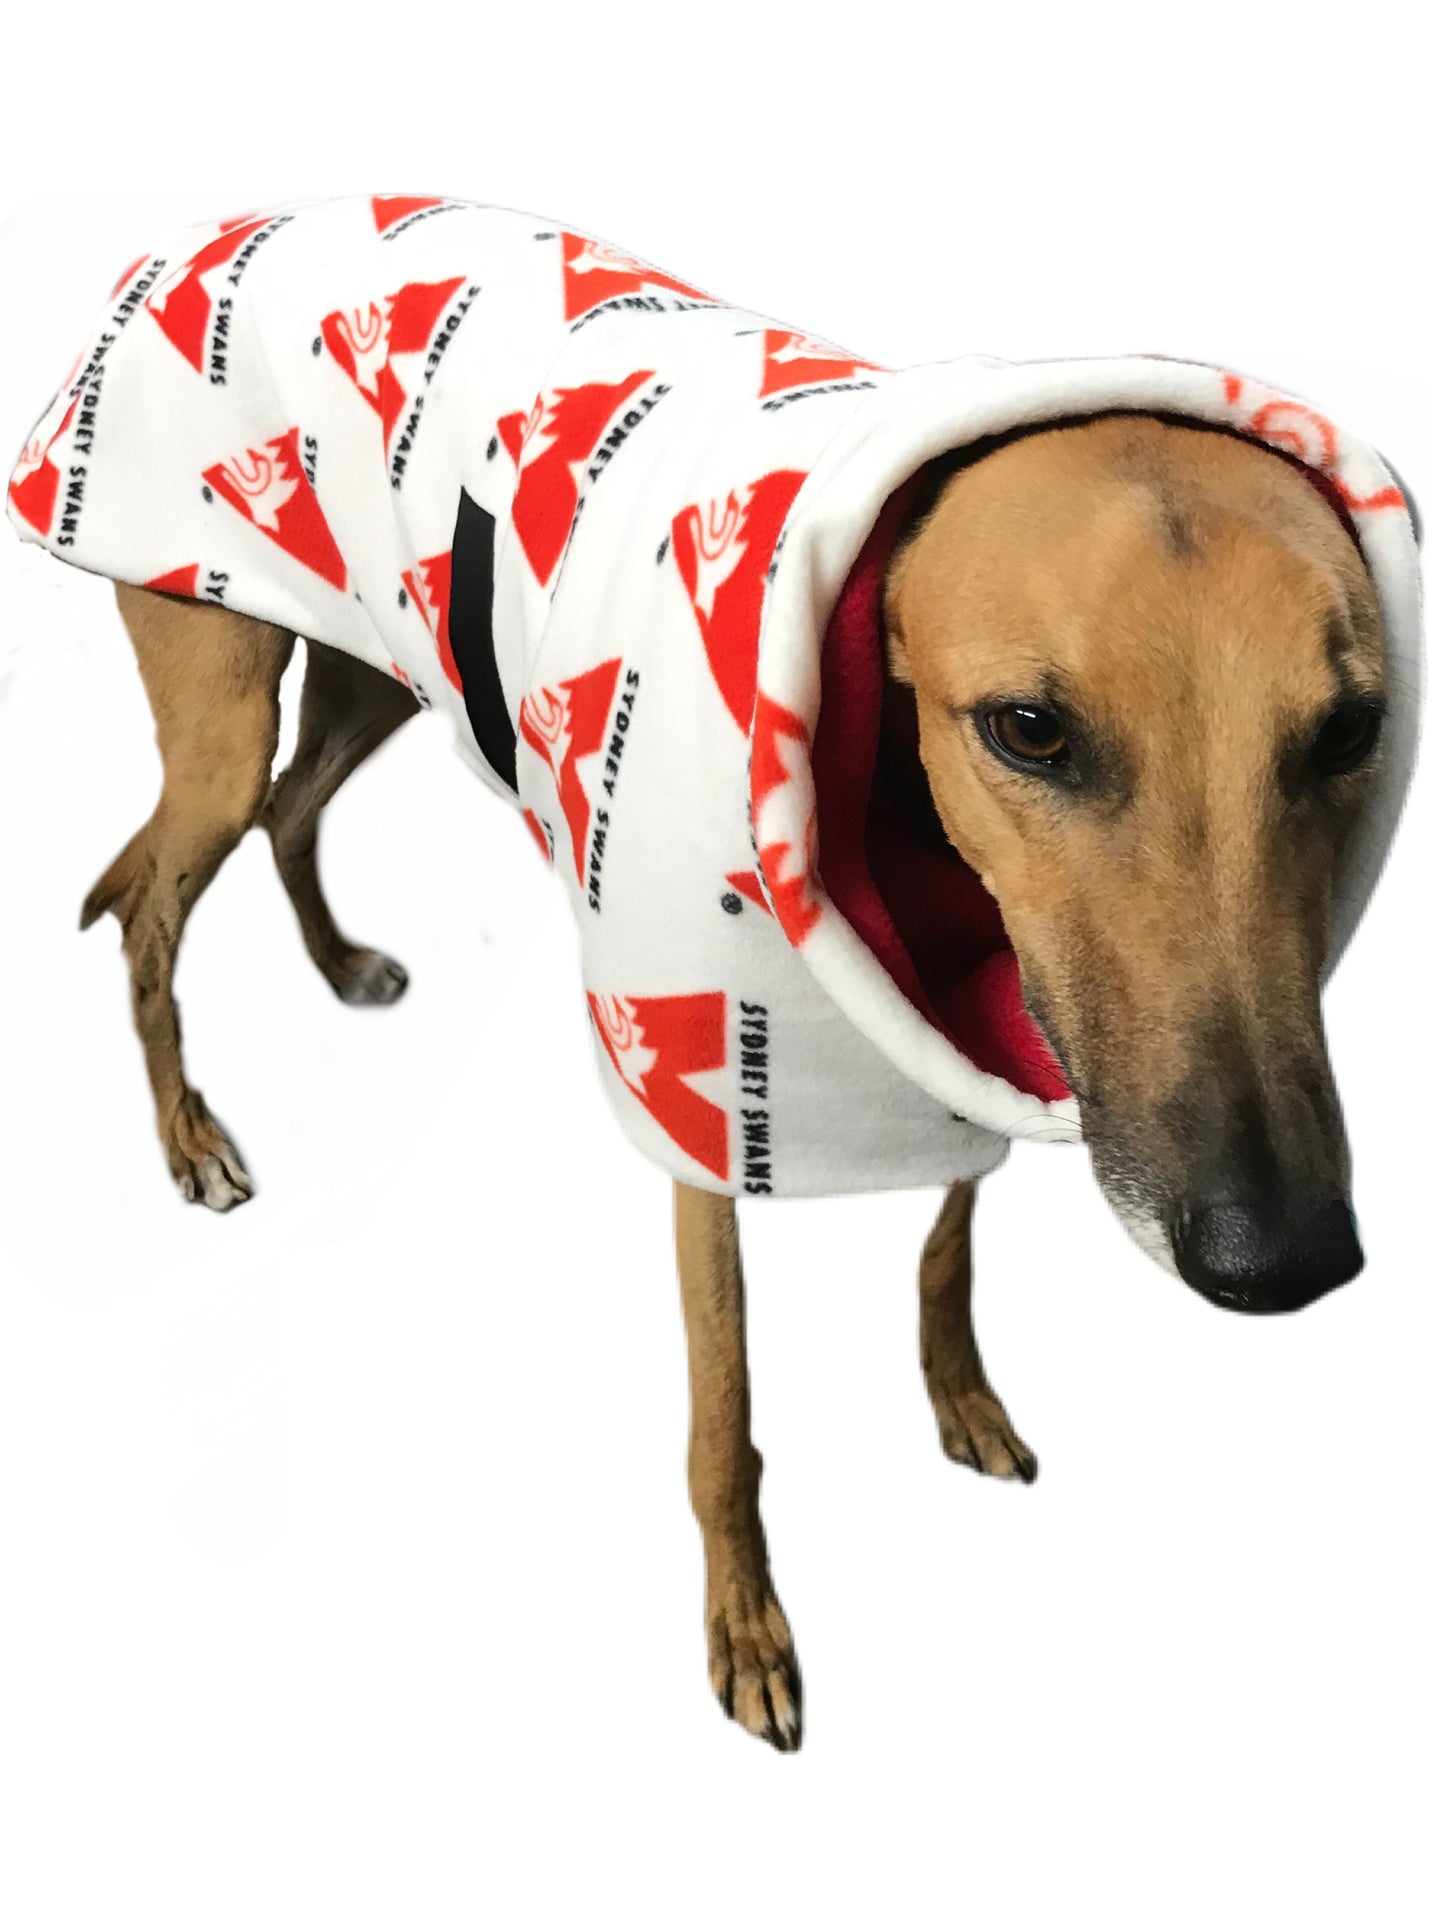 AFL Sydney Swans inspired greyhound coat deluxe style double polar fleece washable